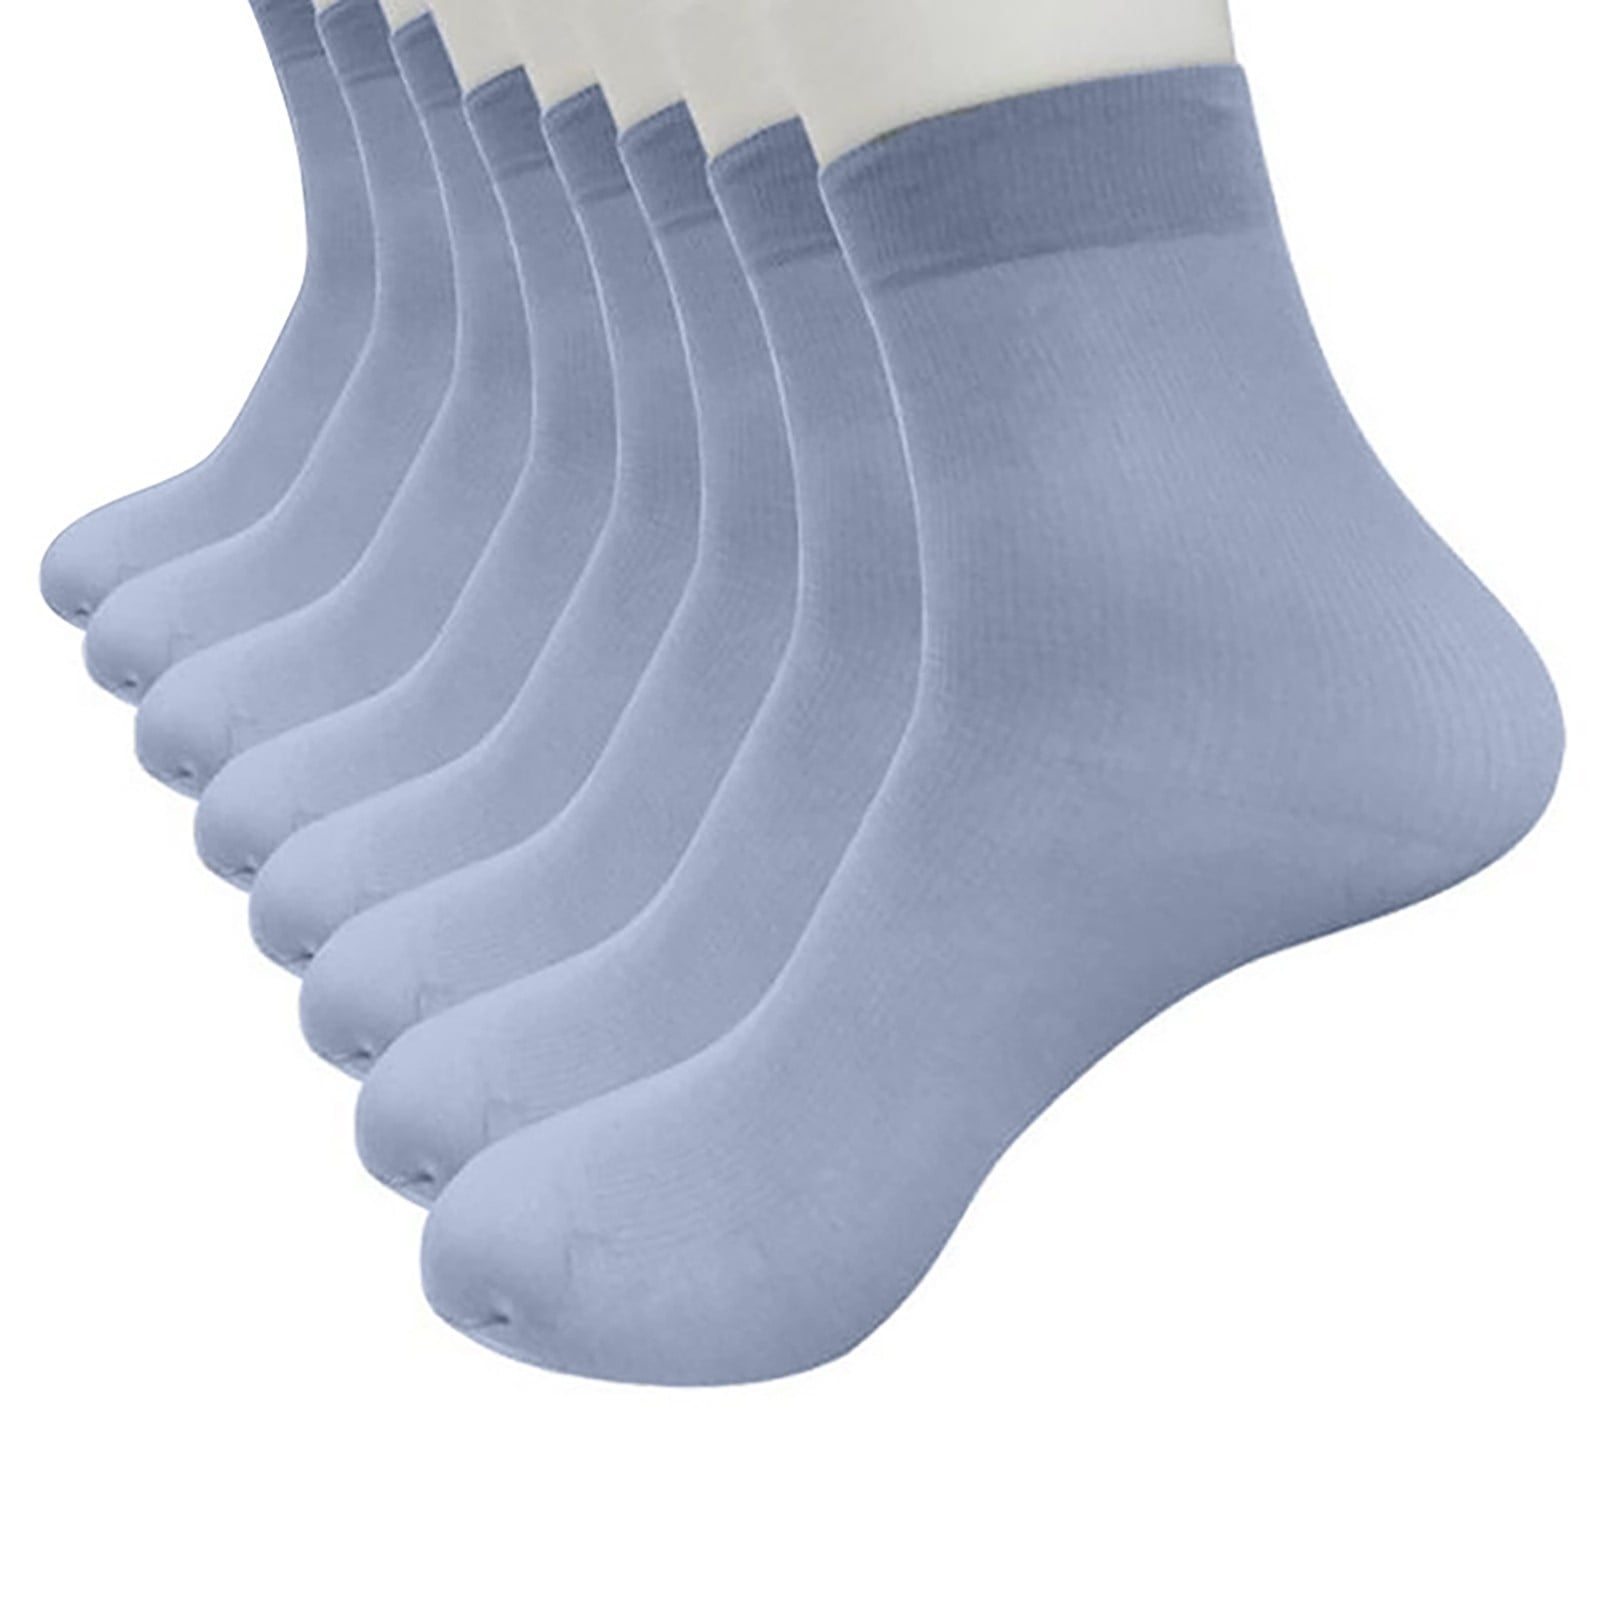 Qcmgmg Socks for Women No Show Crew Cushion Grip Athletic Socks Women ...